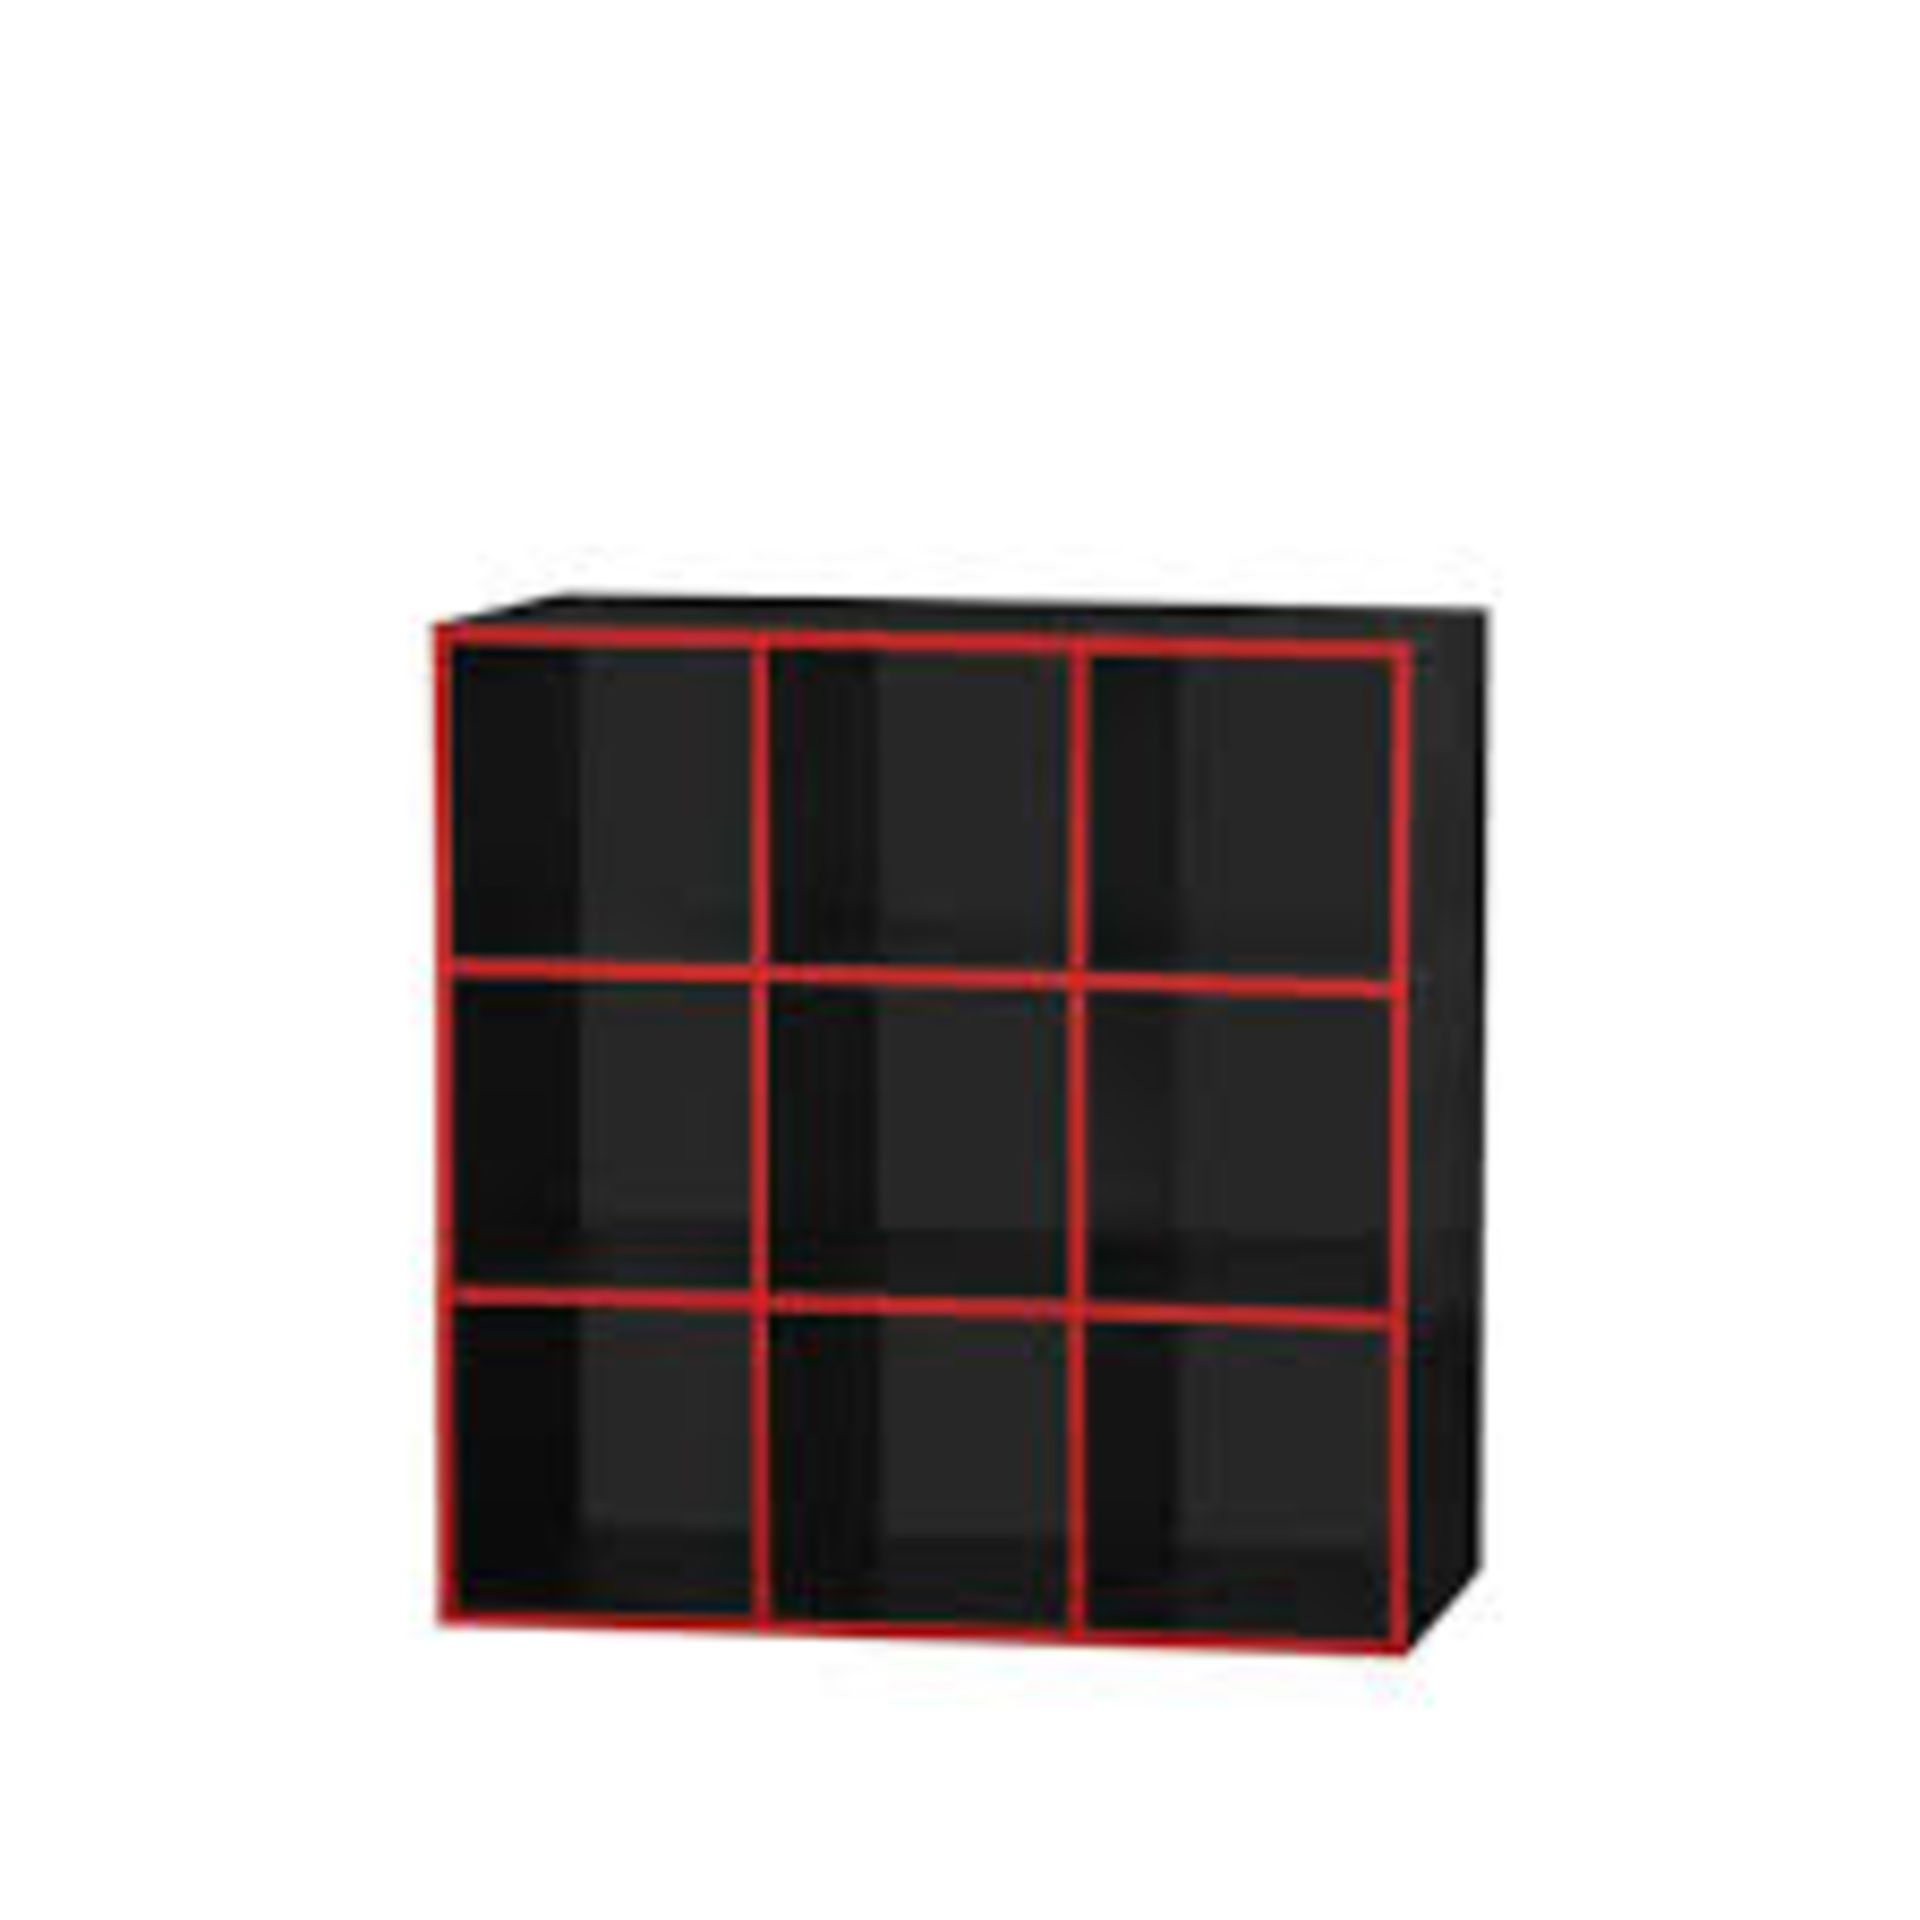 Lloyd Pascal VIRTUOSO 9 Cube Storage, Black/Red. RRP £109